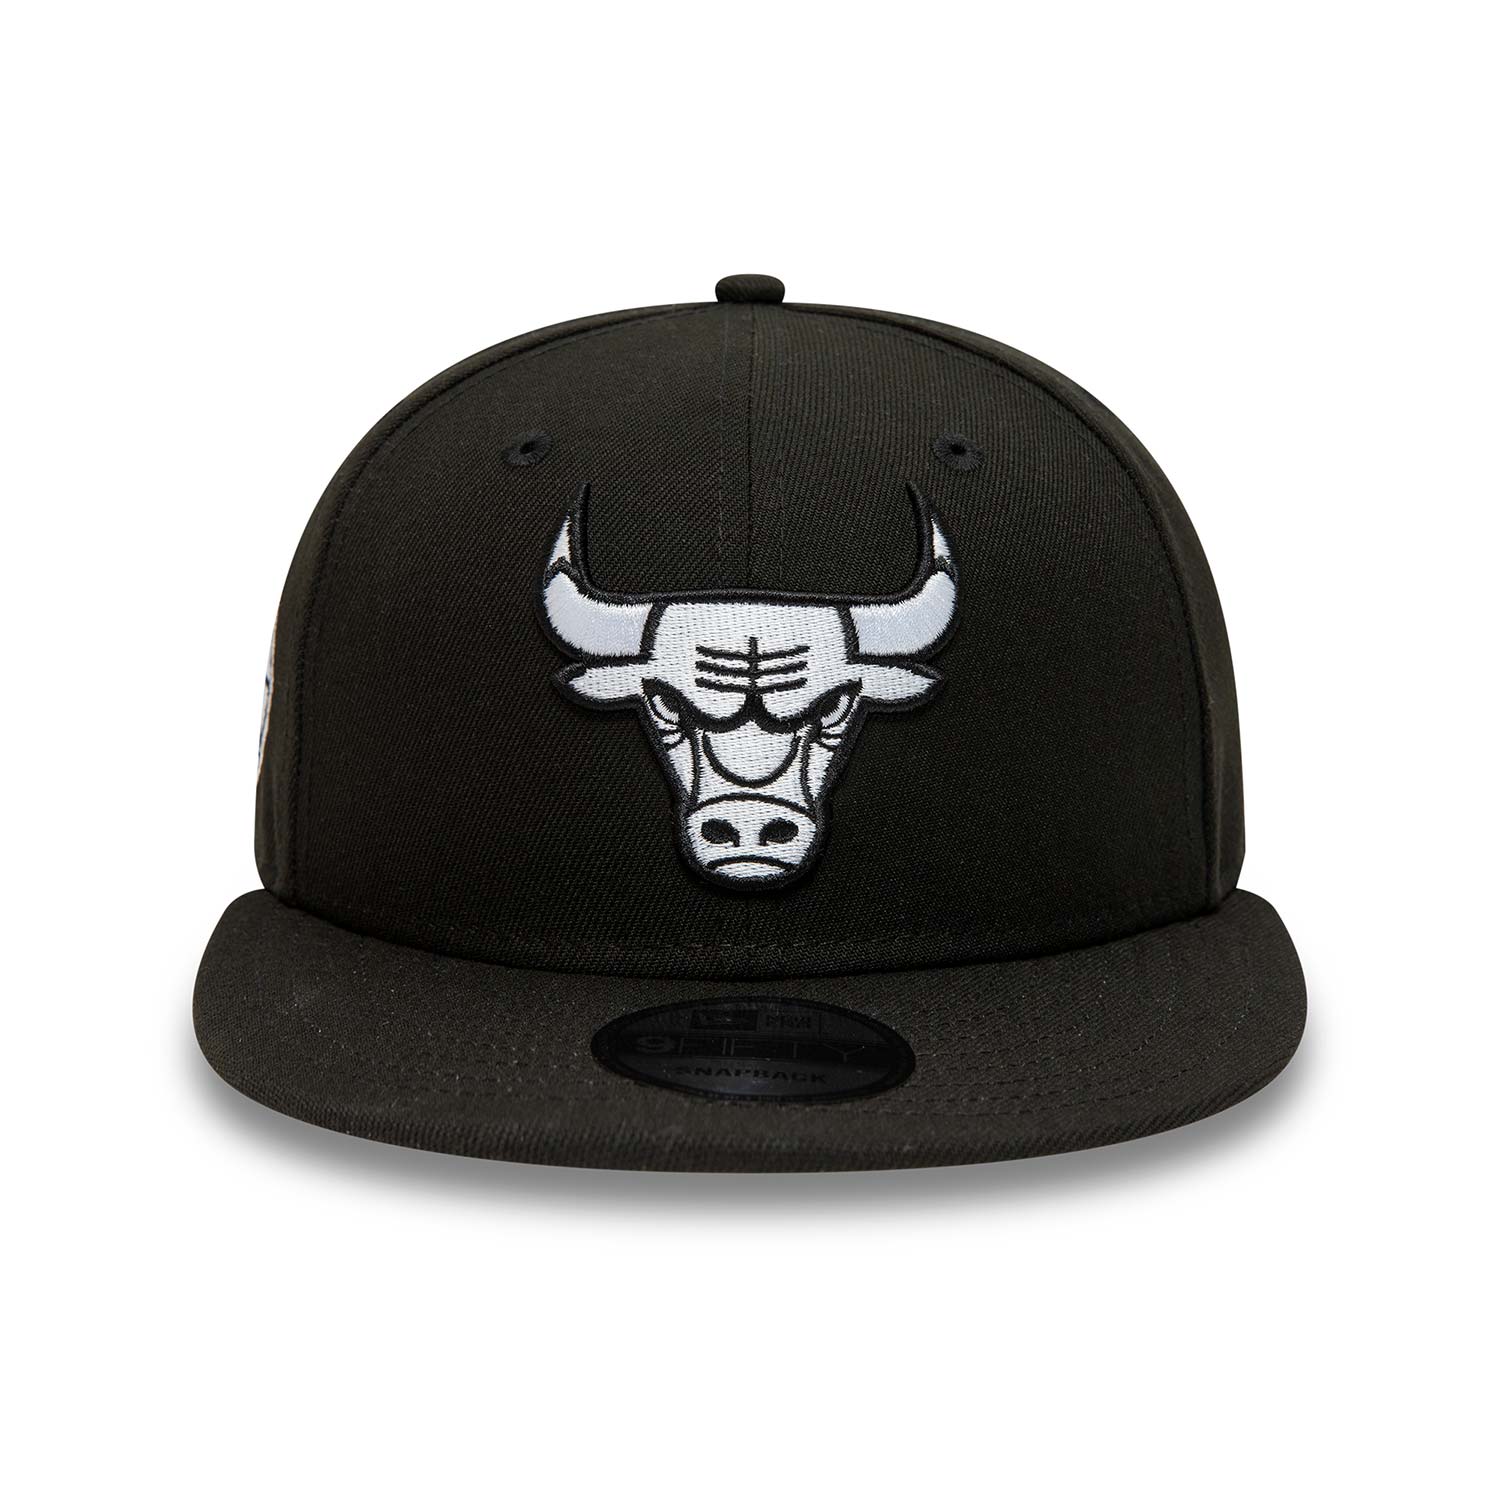 Chicago Bulls Black 9FIFTY Snapback Cap